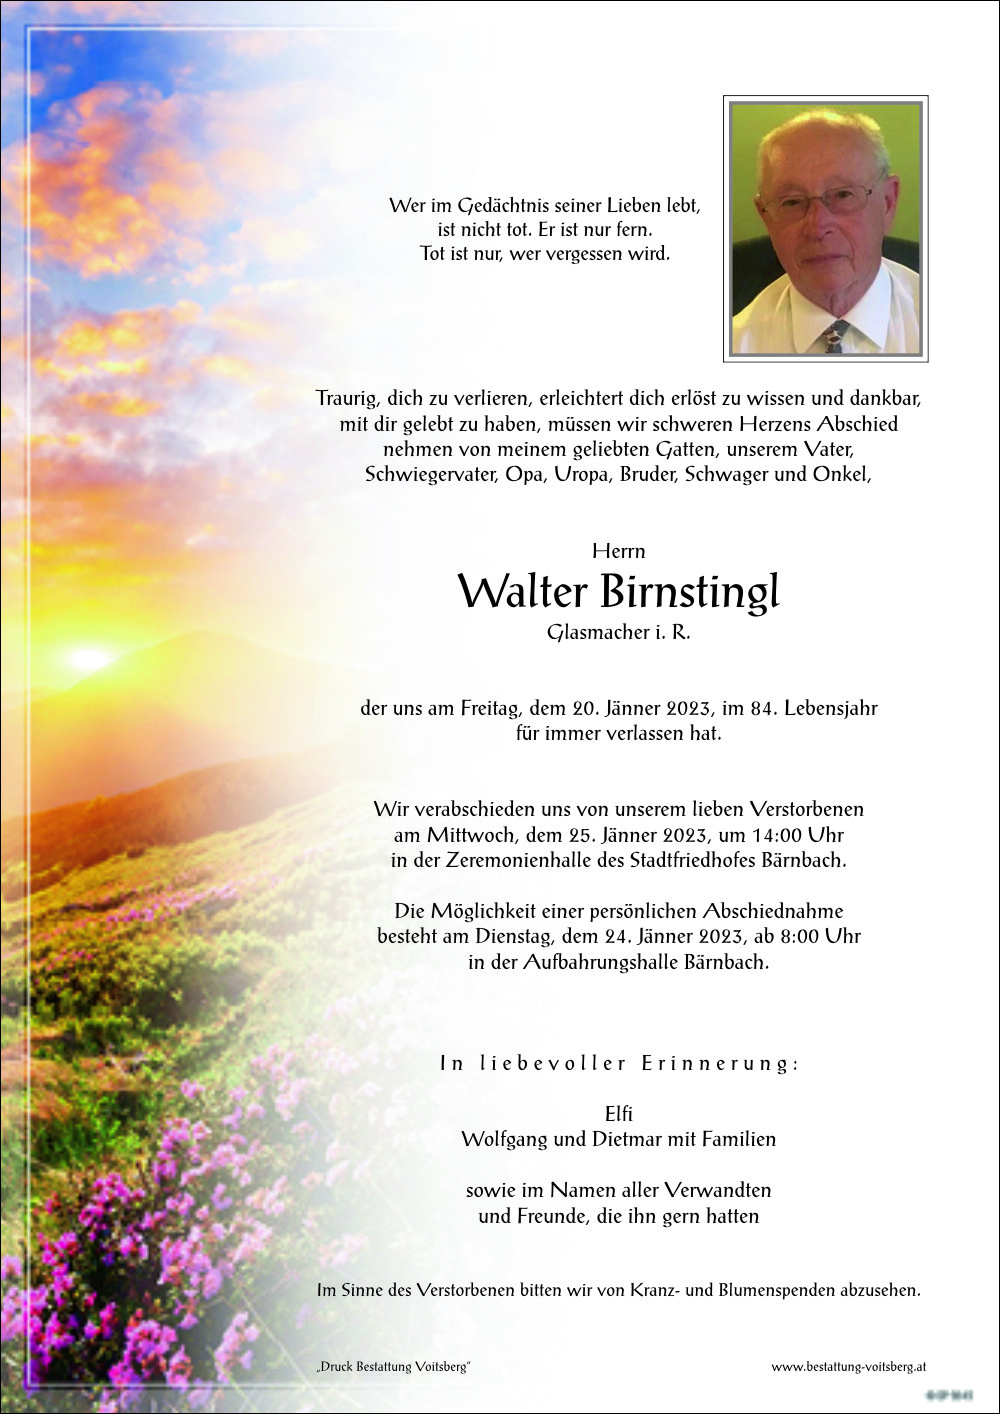 Walter Birnstingl